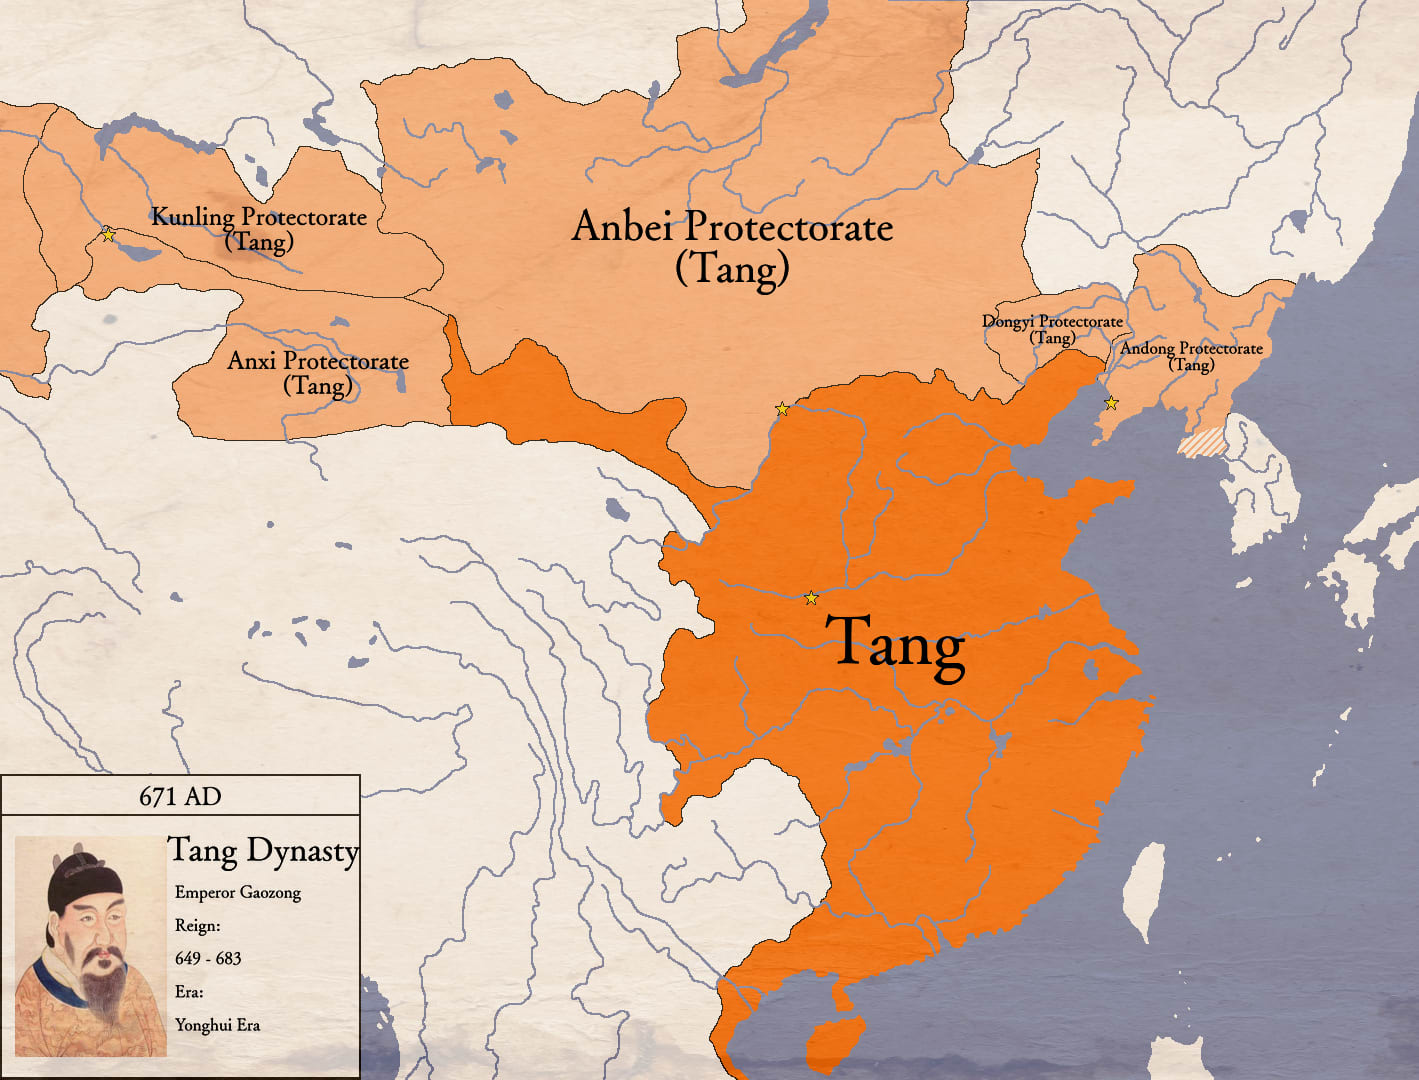 Tang Dynasty 671 AD under Emperor Gaozong